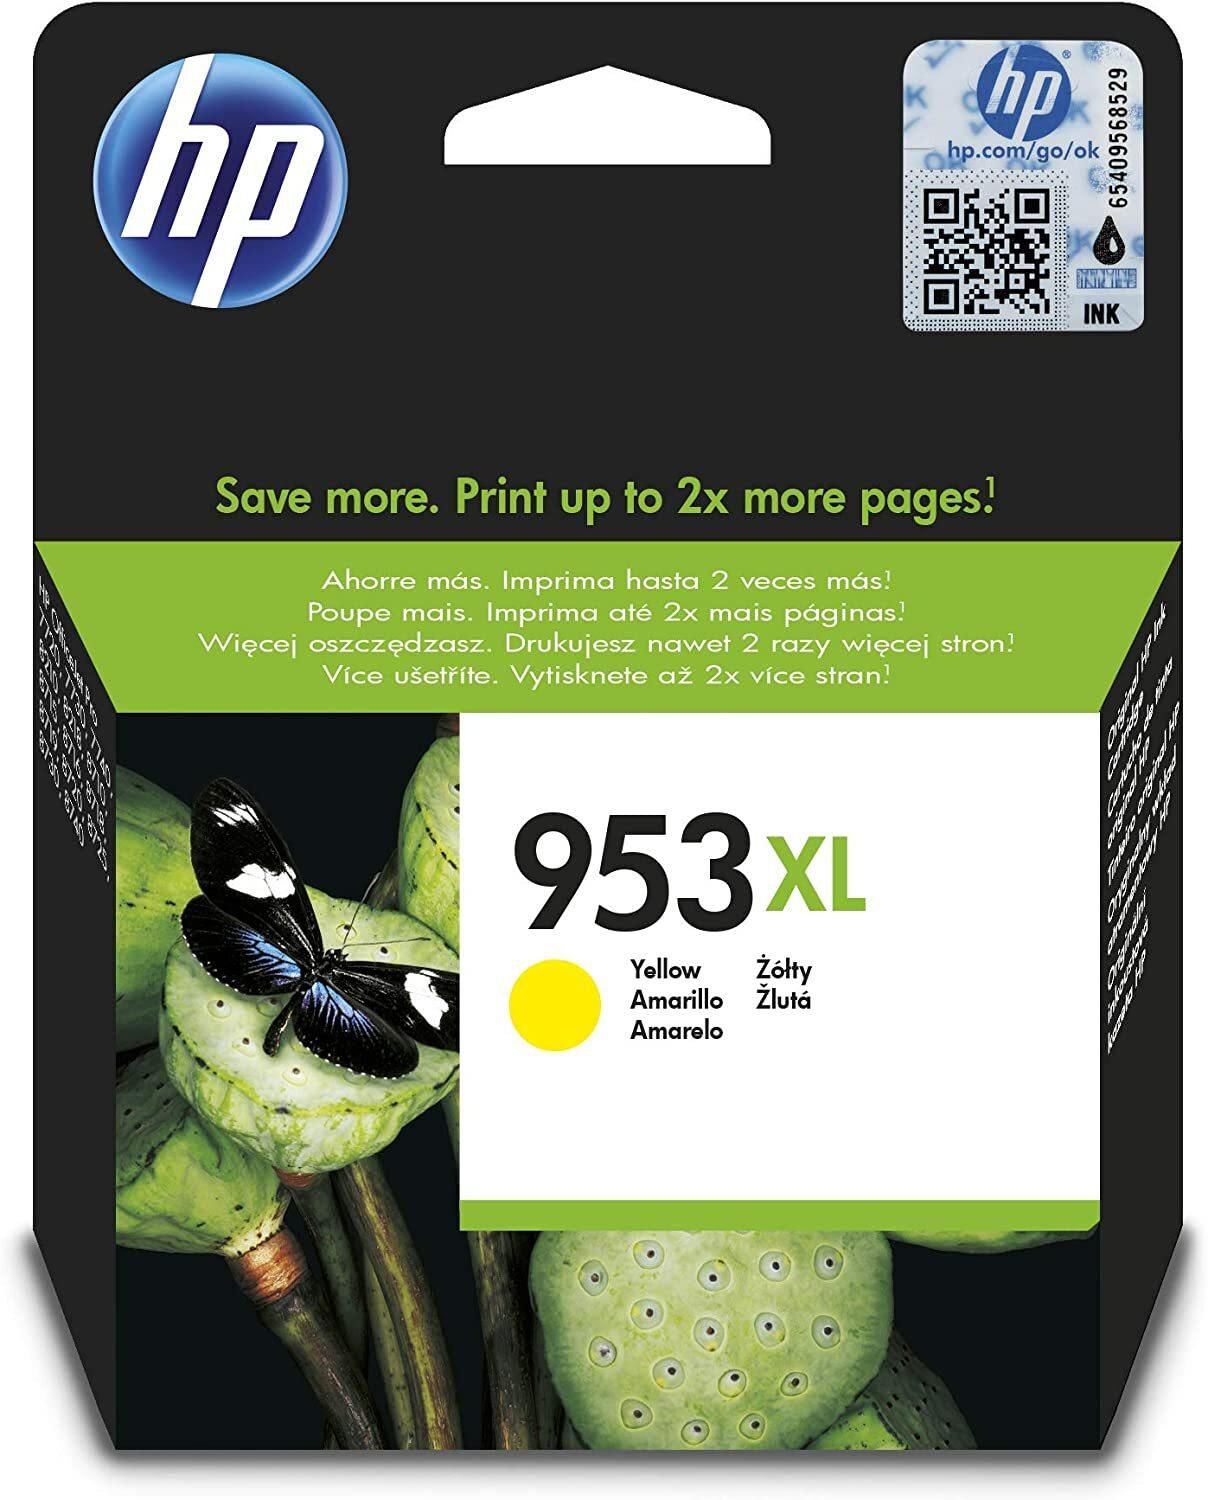 HP 953Xl High Yield Yellow Original Ink Cartridge [F6U18Ae], Works With HP Officejet Pro 7720, 7730, 7740, 8210, 8218, 8710, 8715, 8720, 8725, 8730 Printers